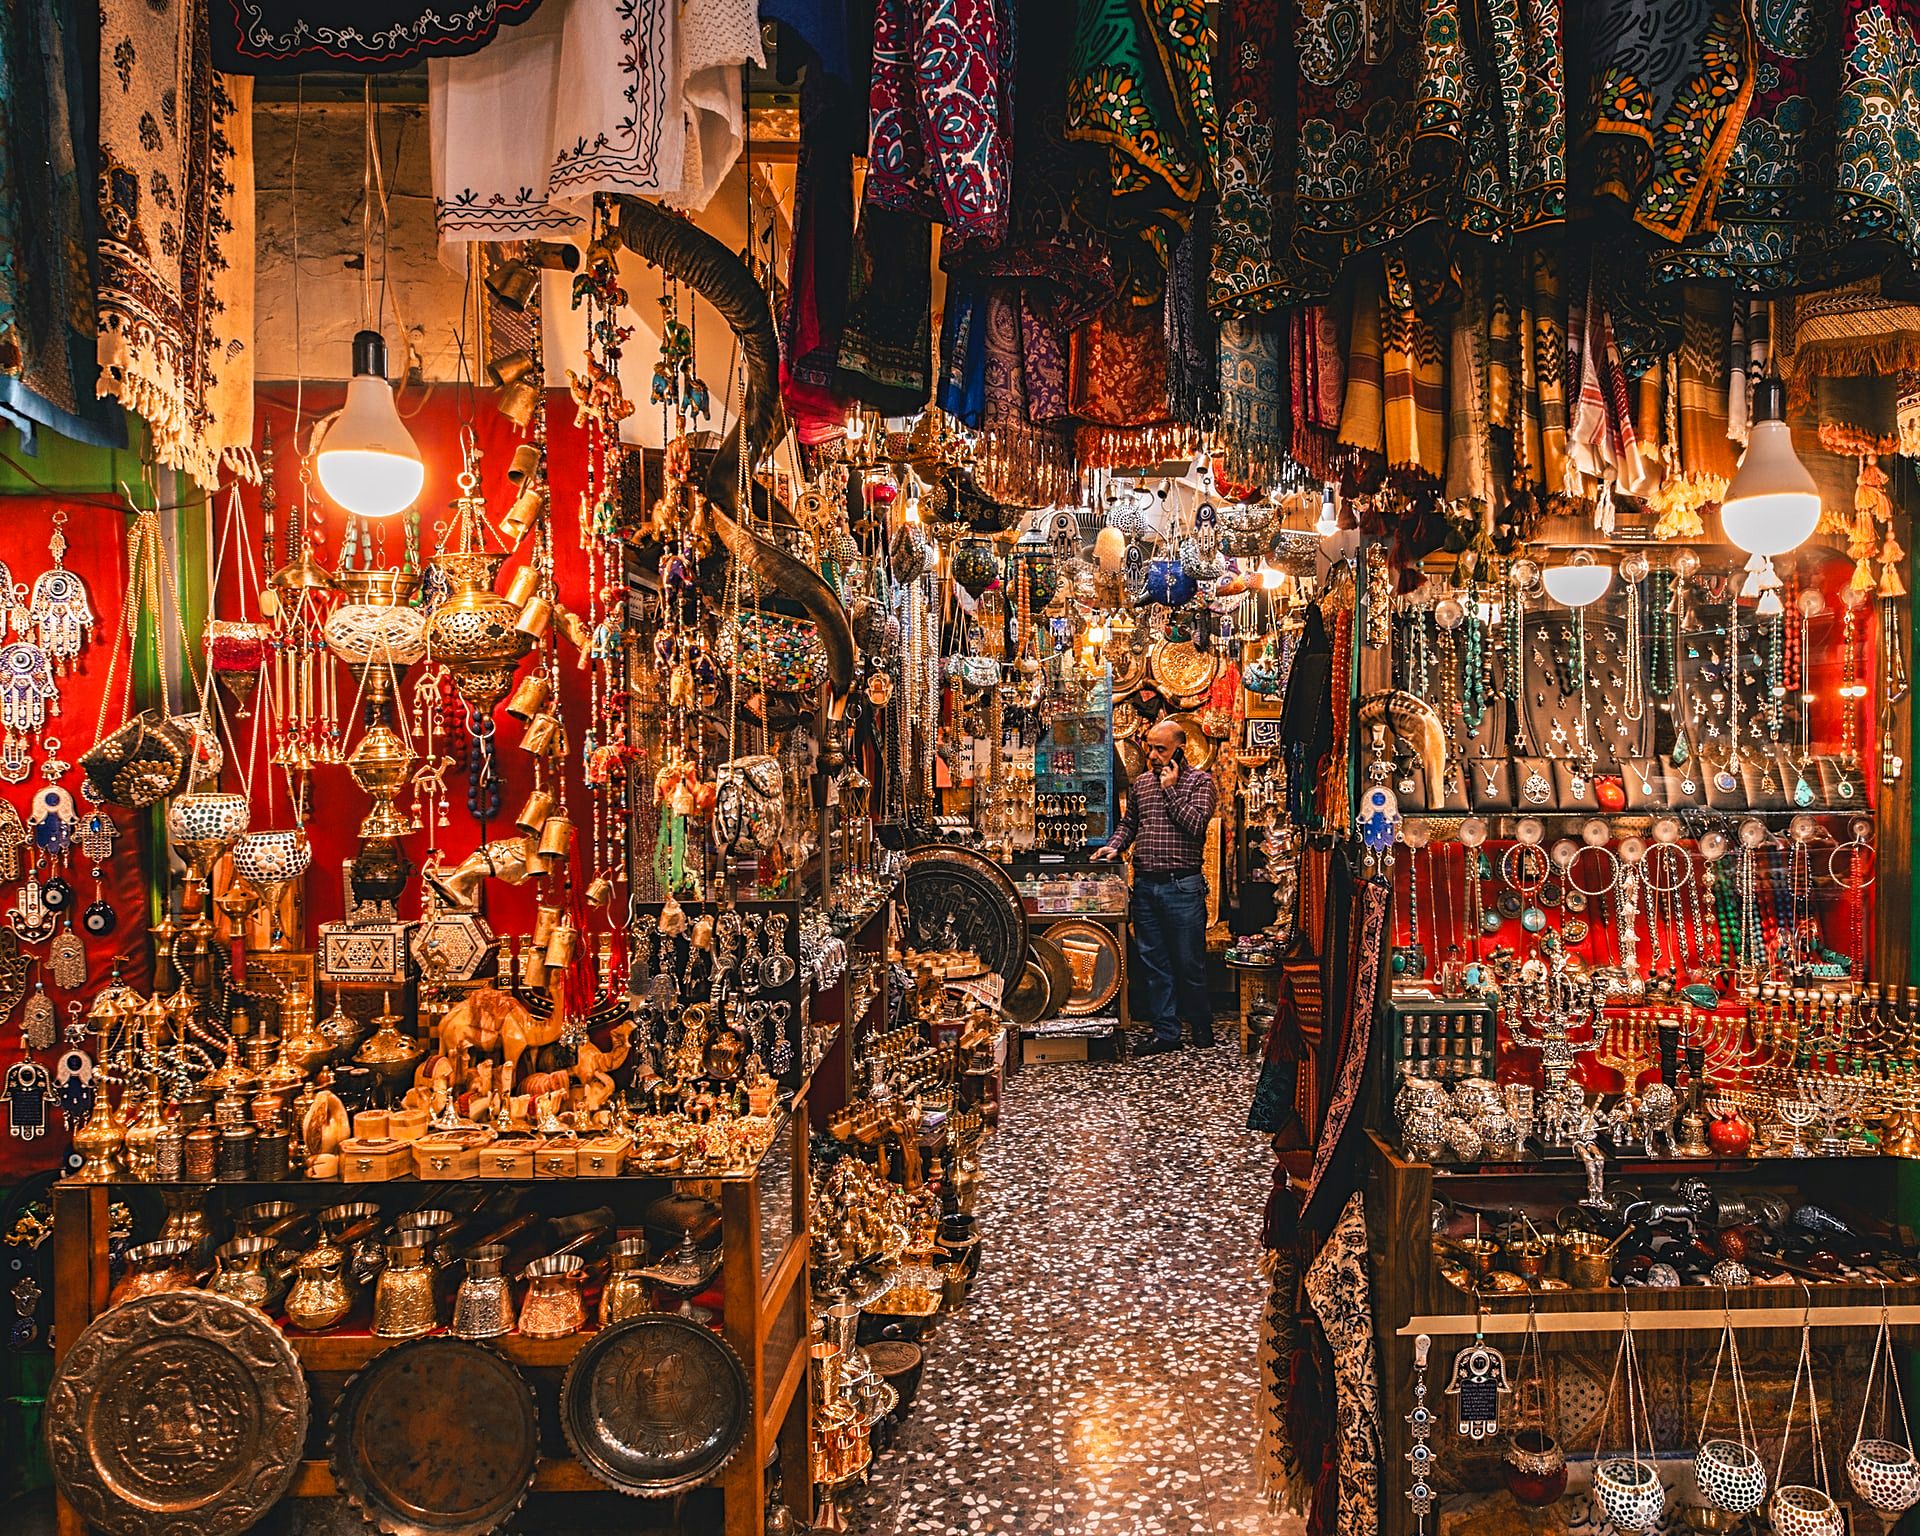 Shop in the Old City of Jerusalem